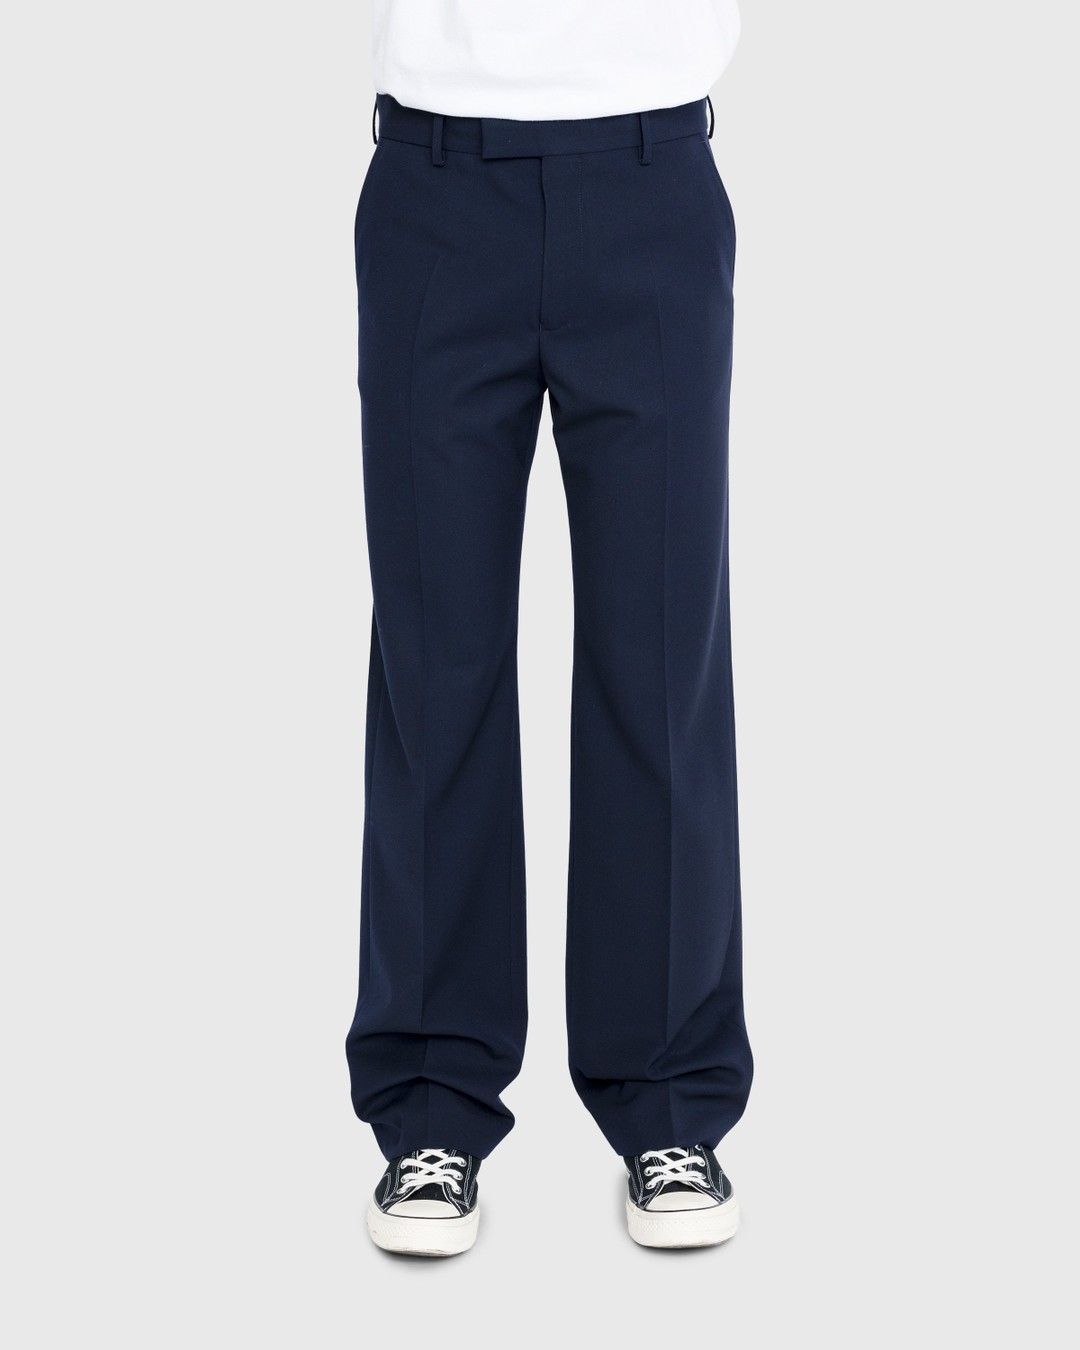 Dries van Noten – Pinnet Long Pants Blue - Pants - Blue - Image 2